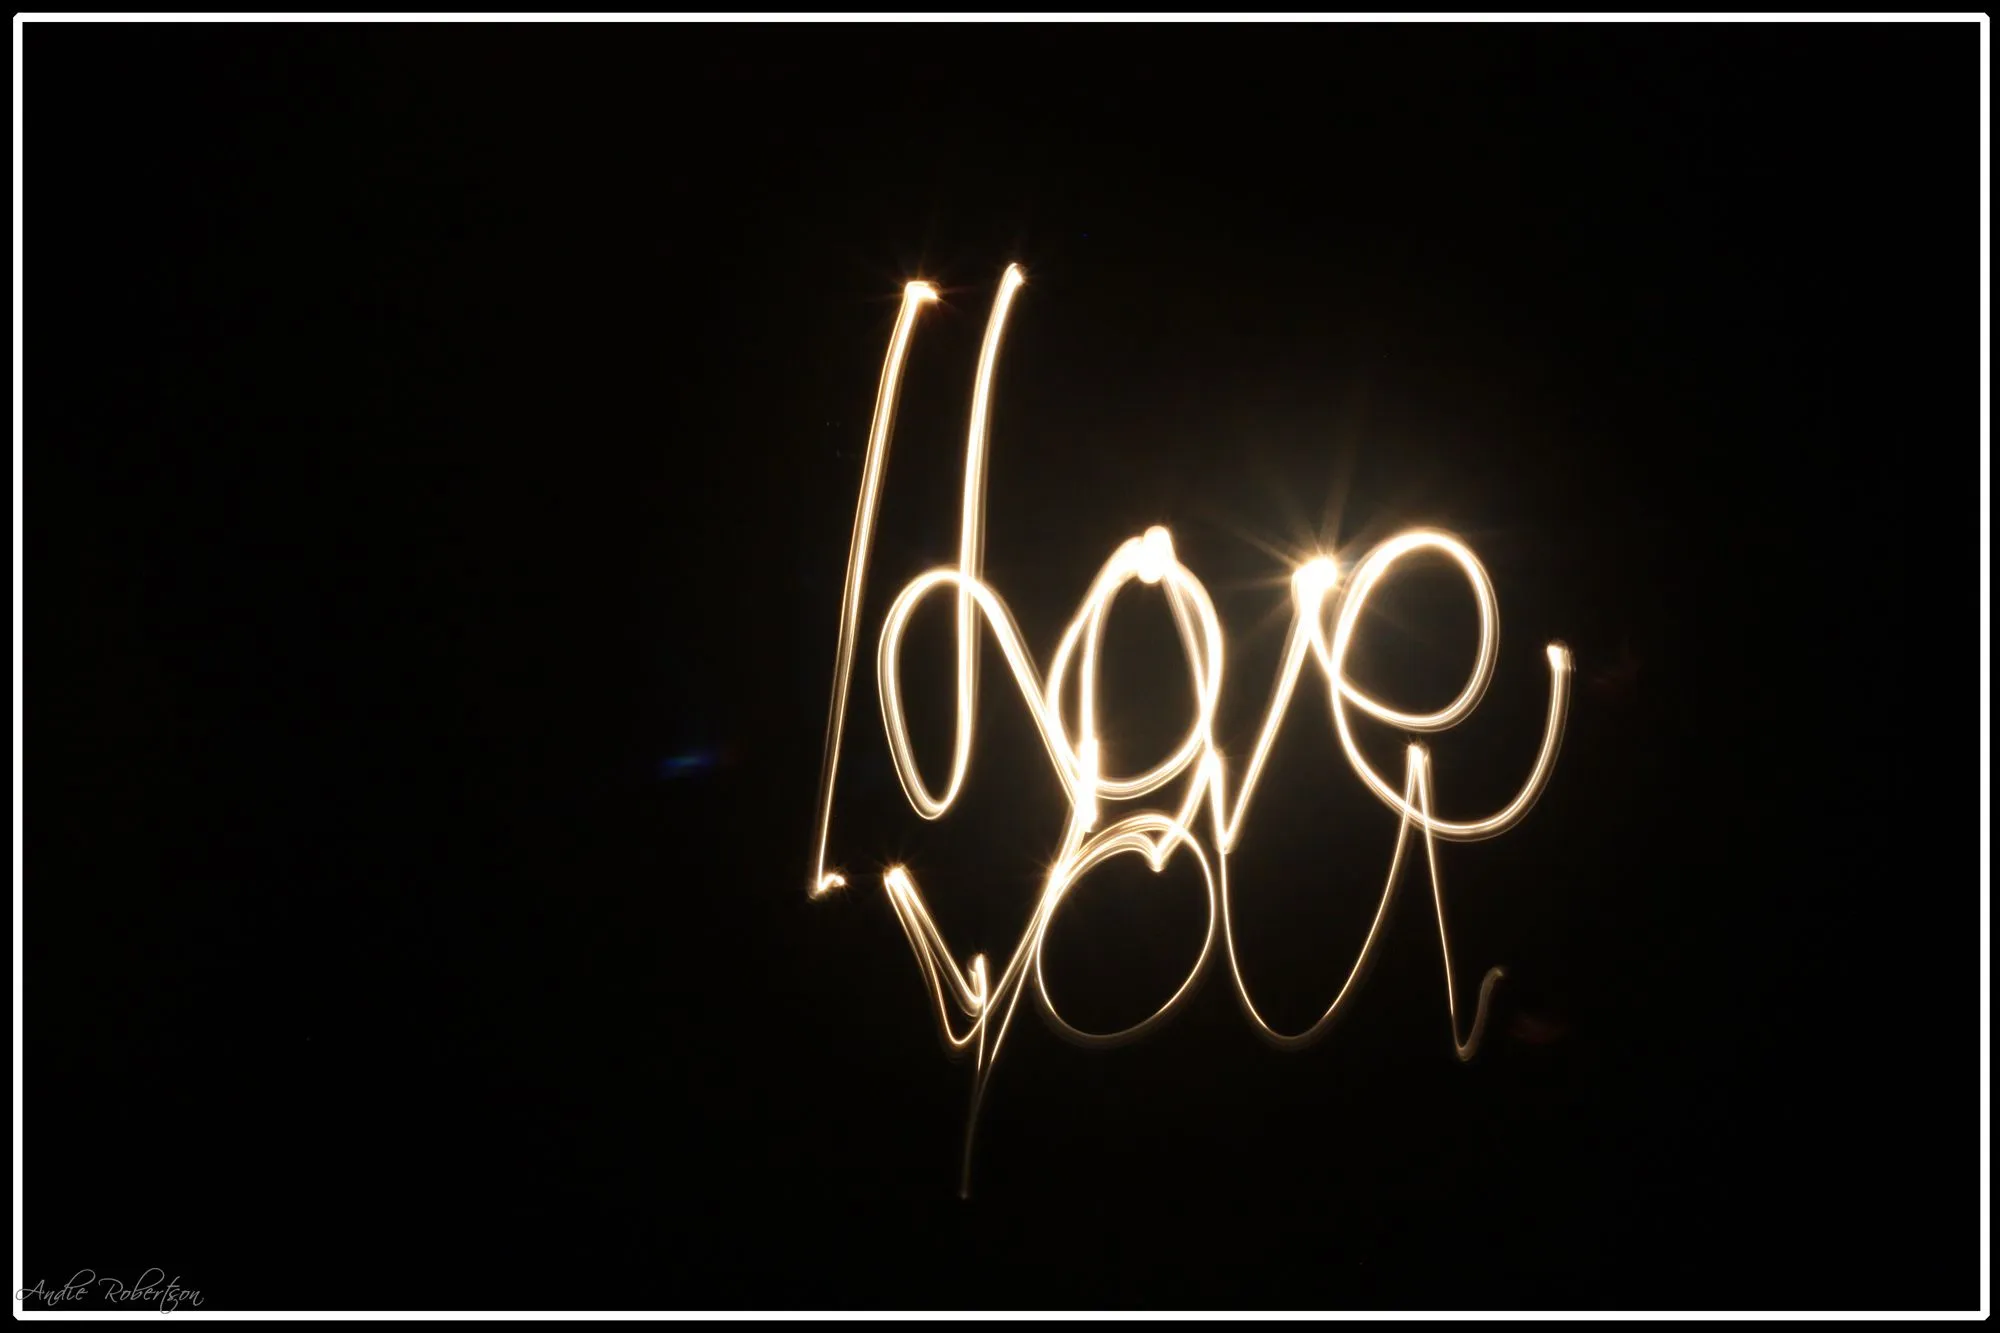 37/365 - I Love You Light Graffiti | Flickr - Photo Sharing!